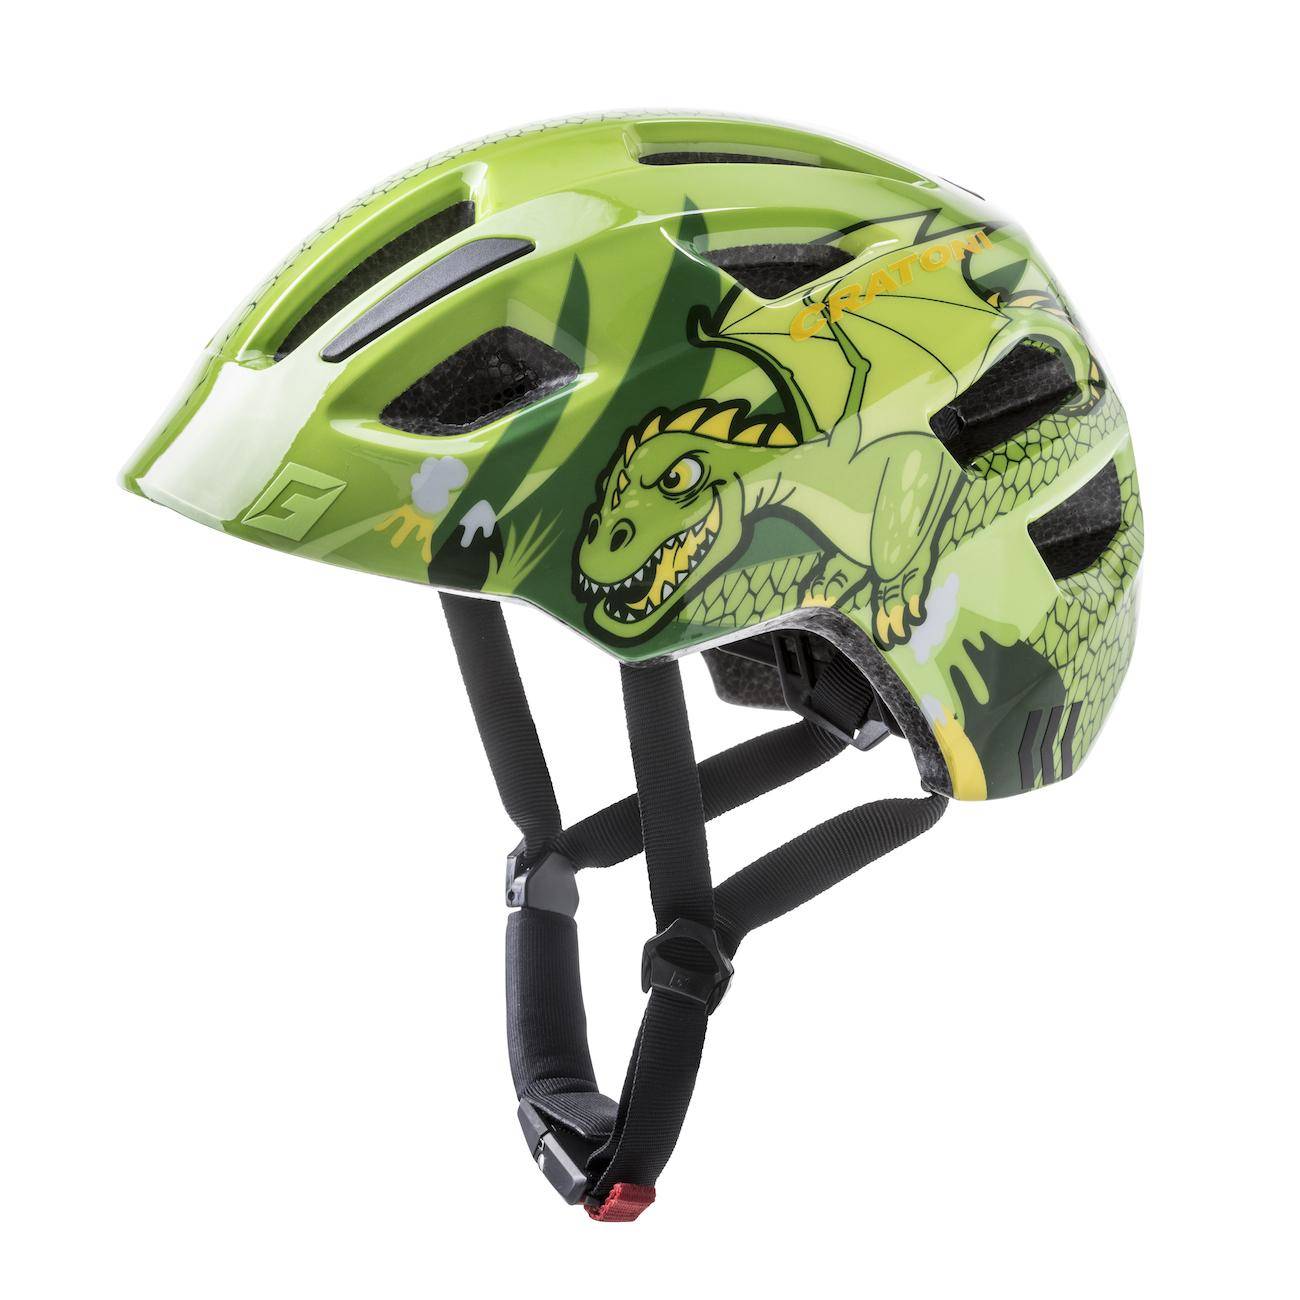 Велосипедный шлем Cratoni Maxster, green dragon glossy, XS/S